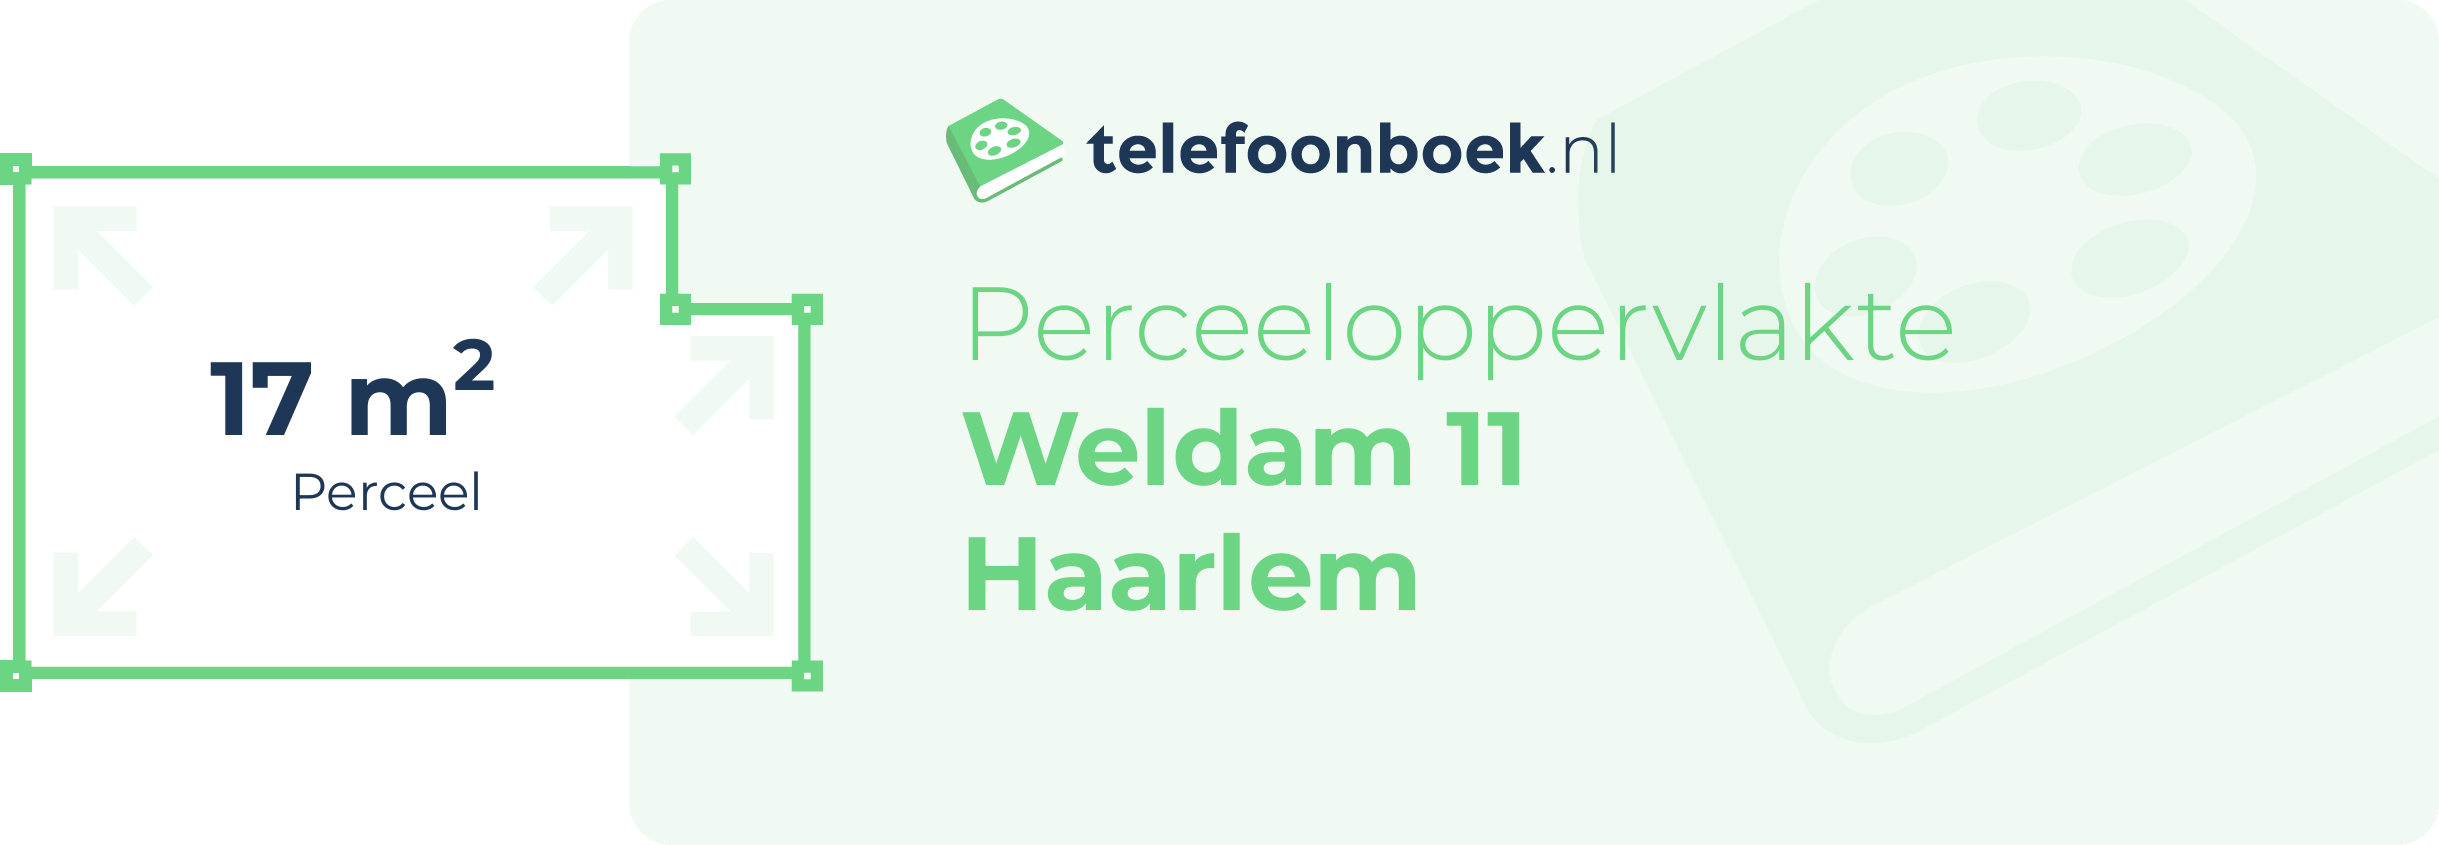 Perceeloppervlakte Weldam 11 Haarlem